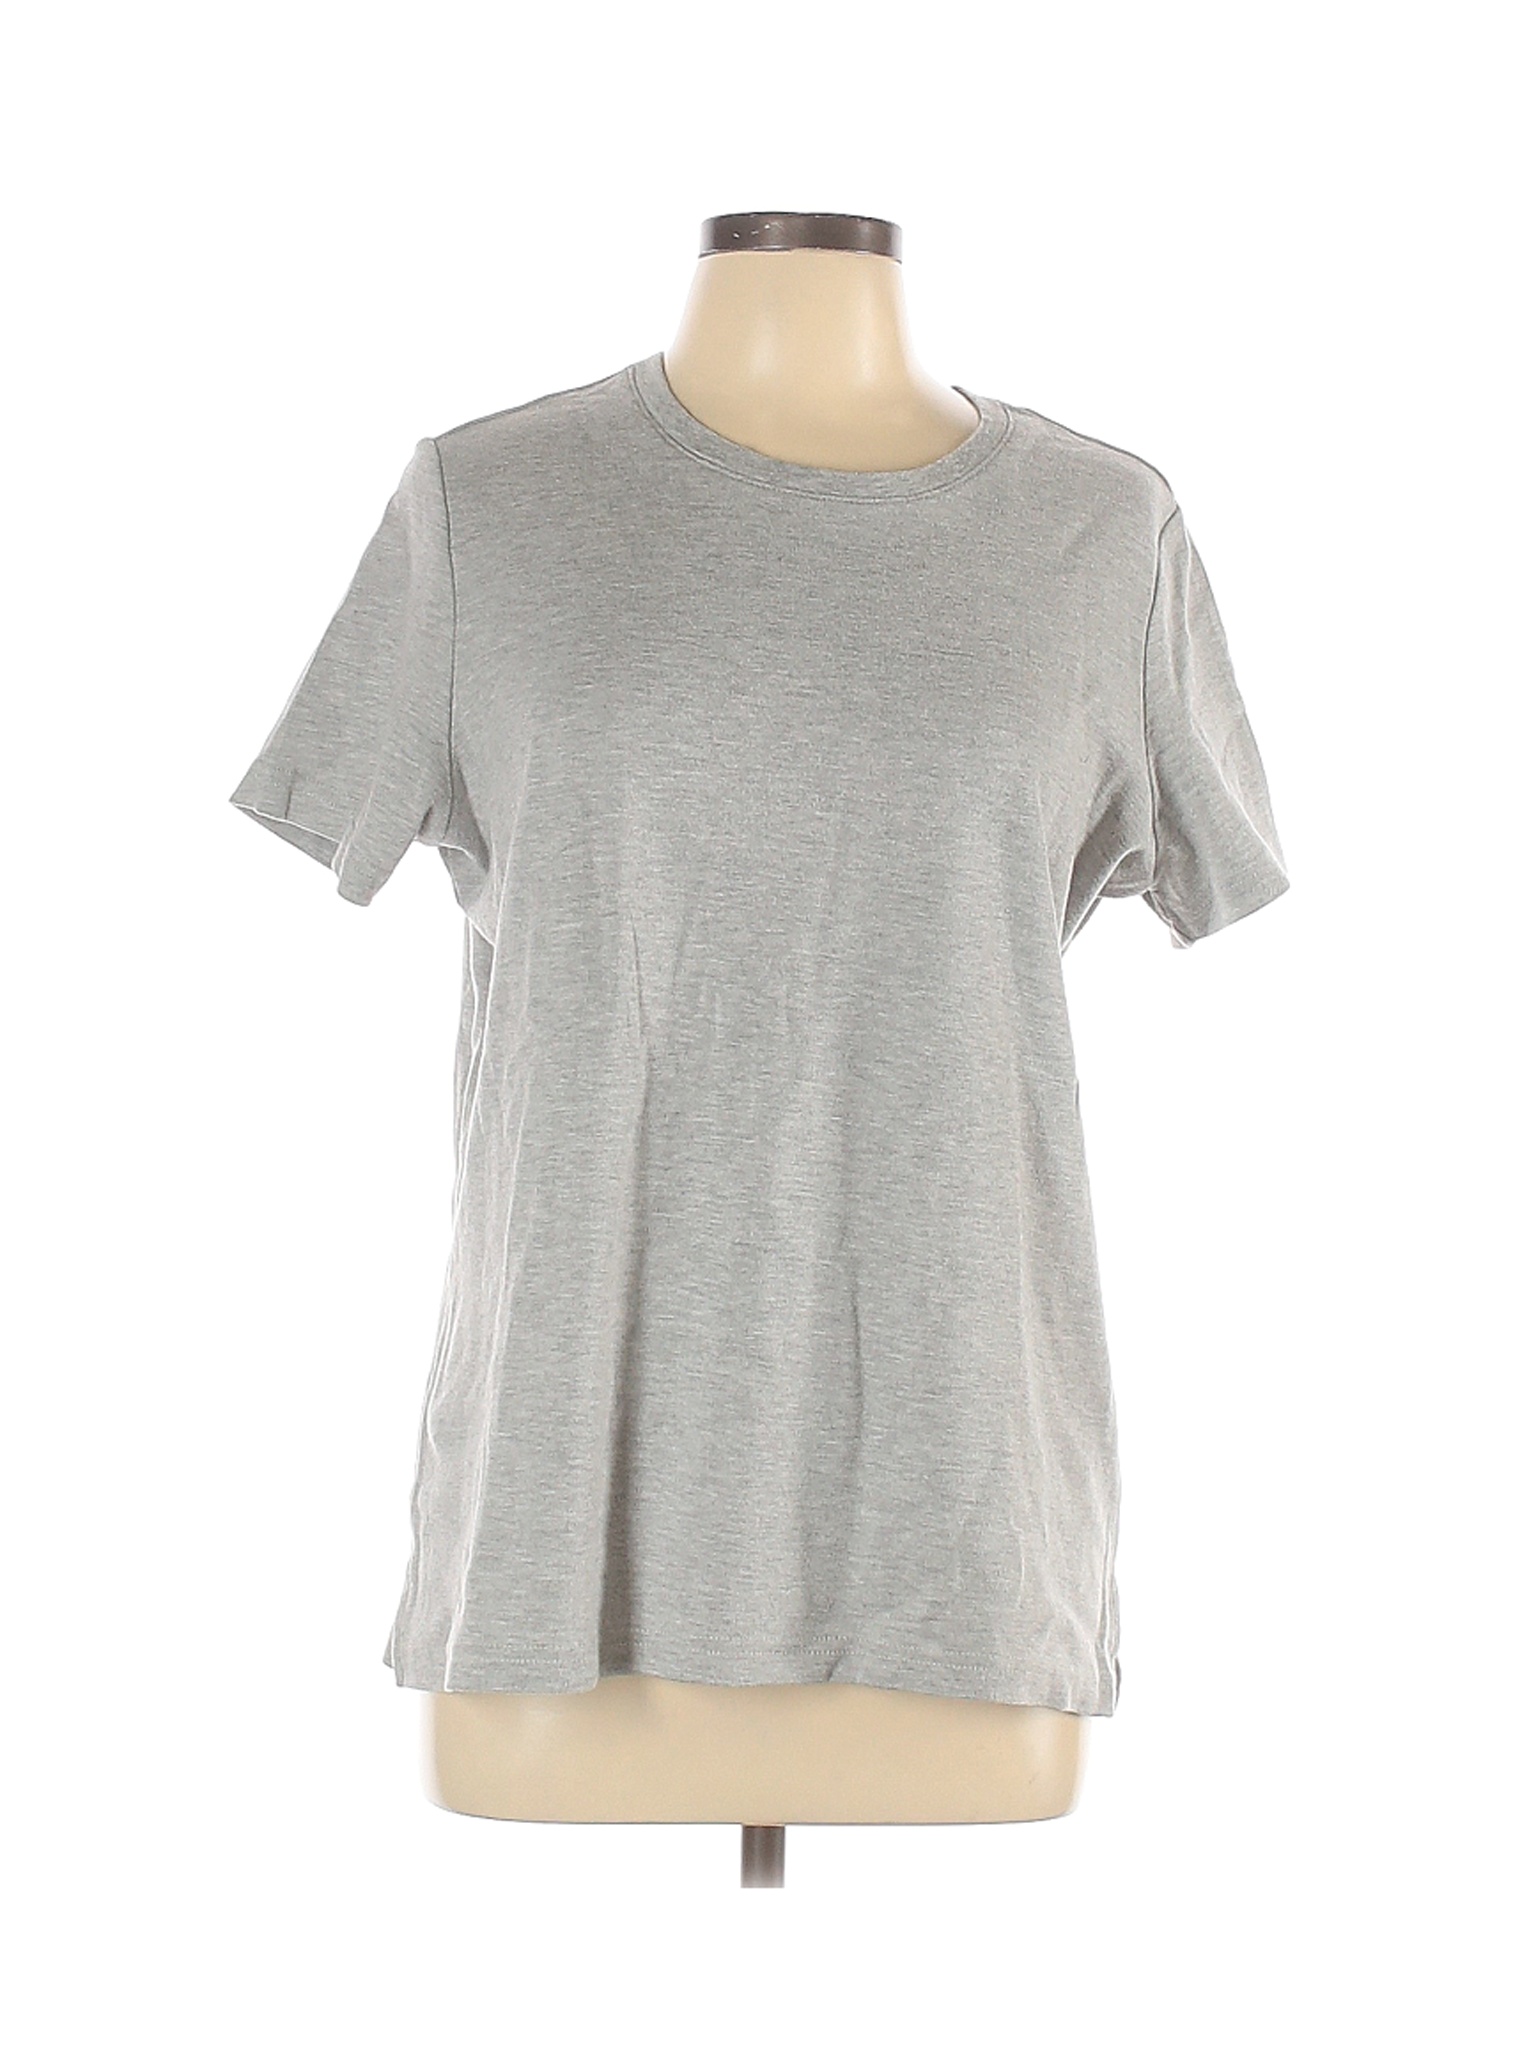 Blair Women Gray Short Sleeve T-Shirt L | eBay